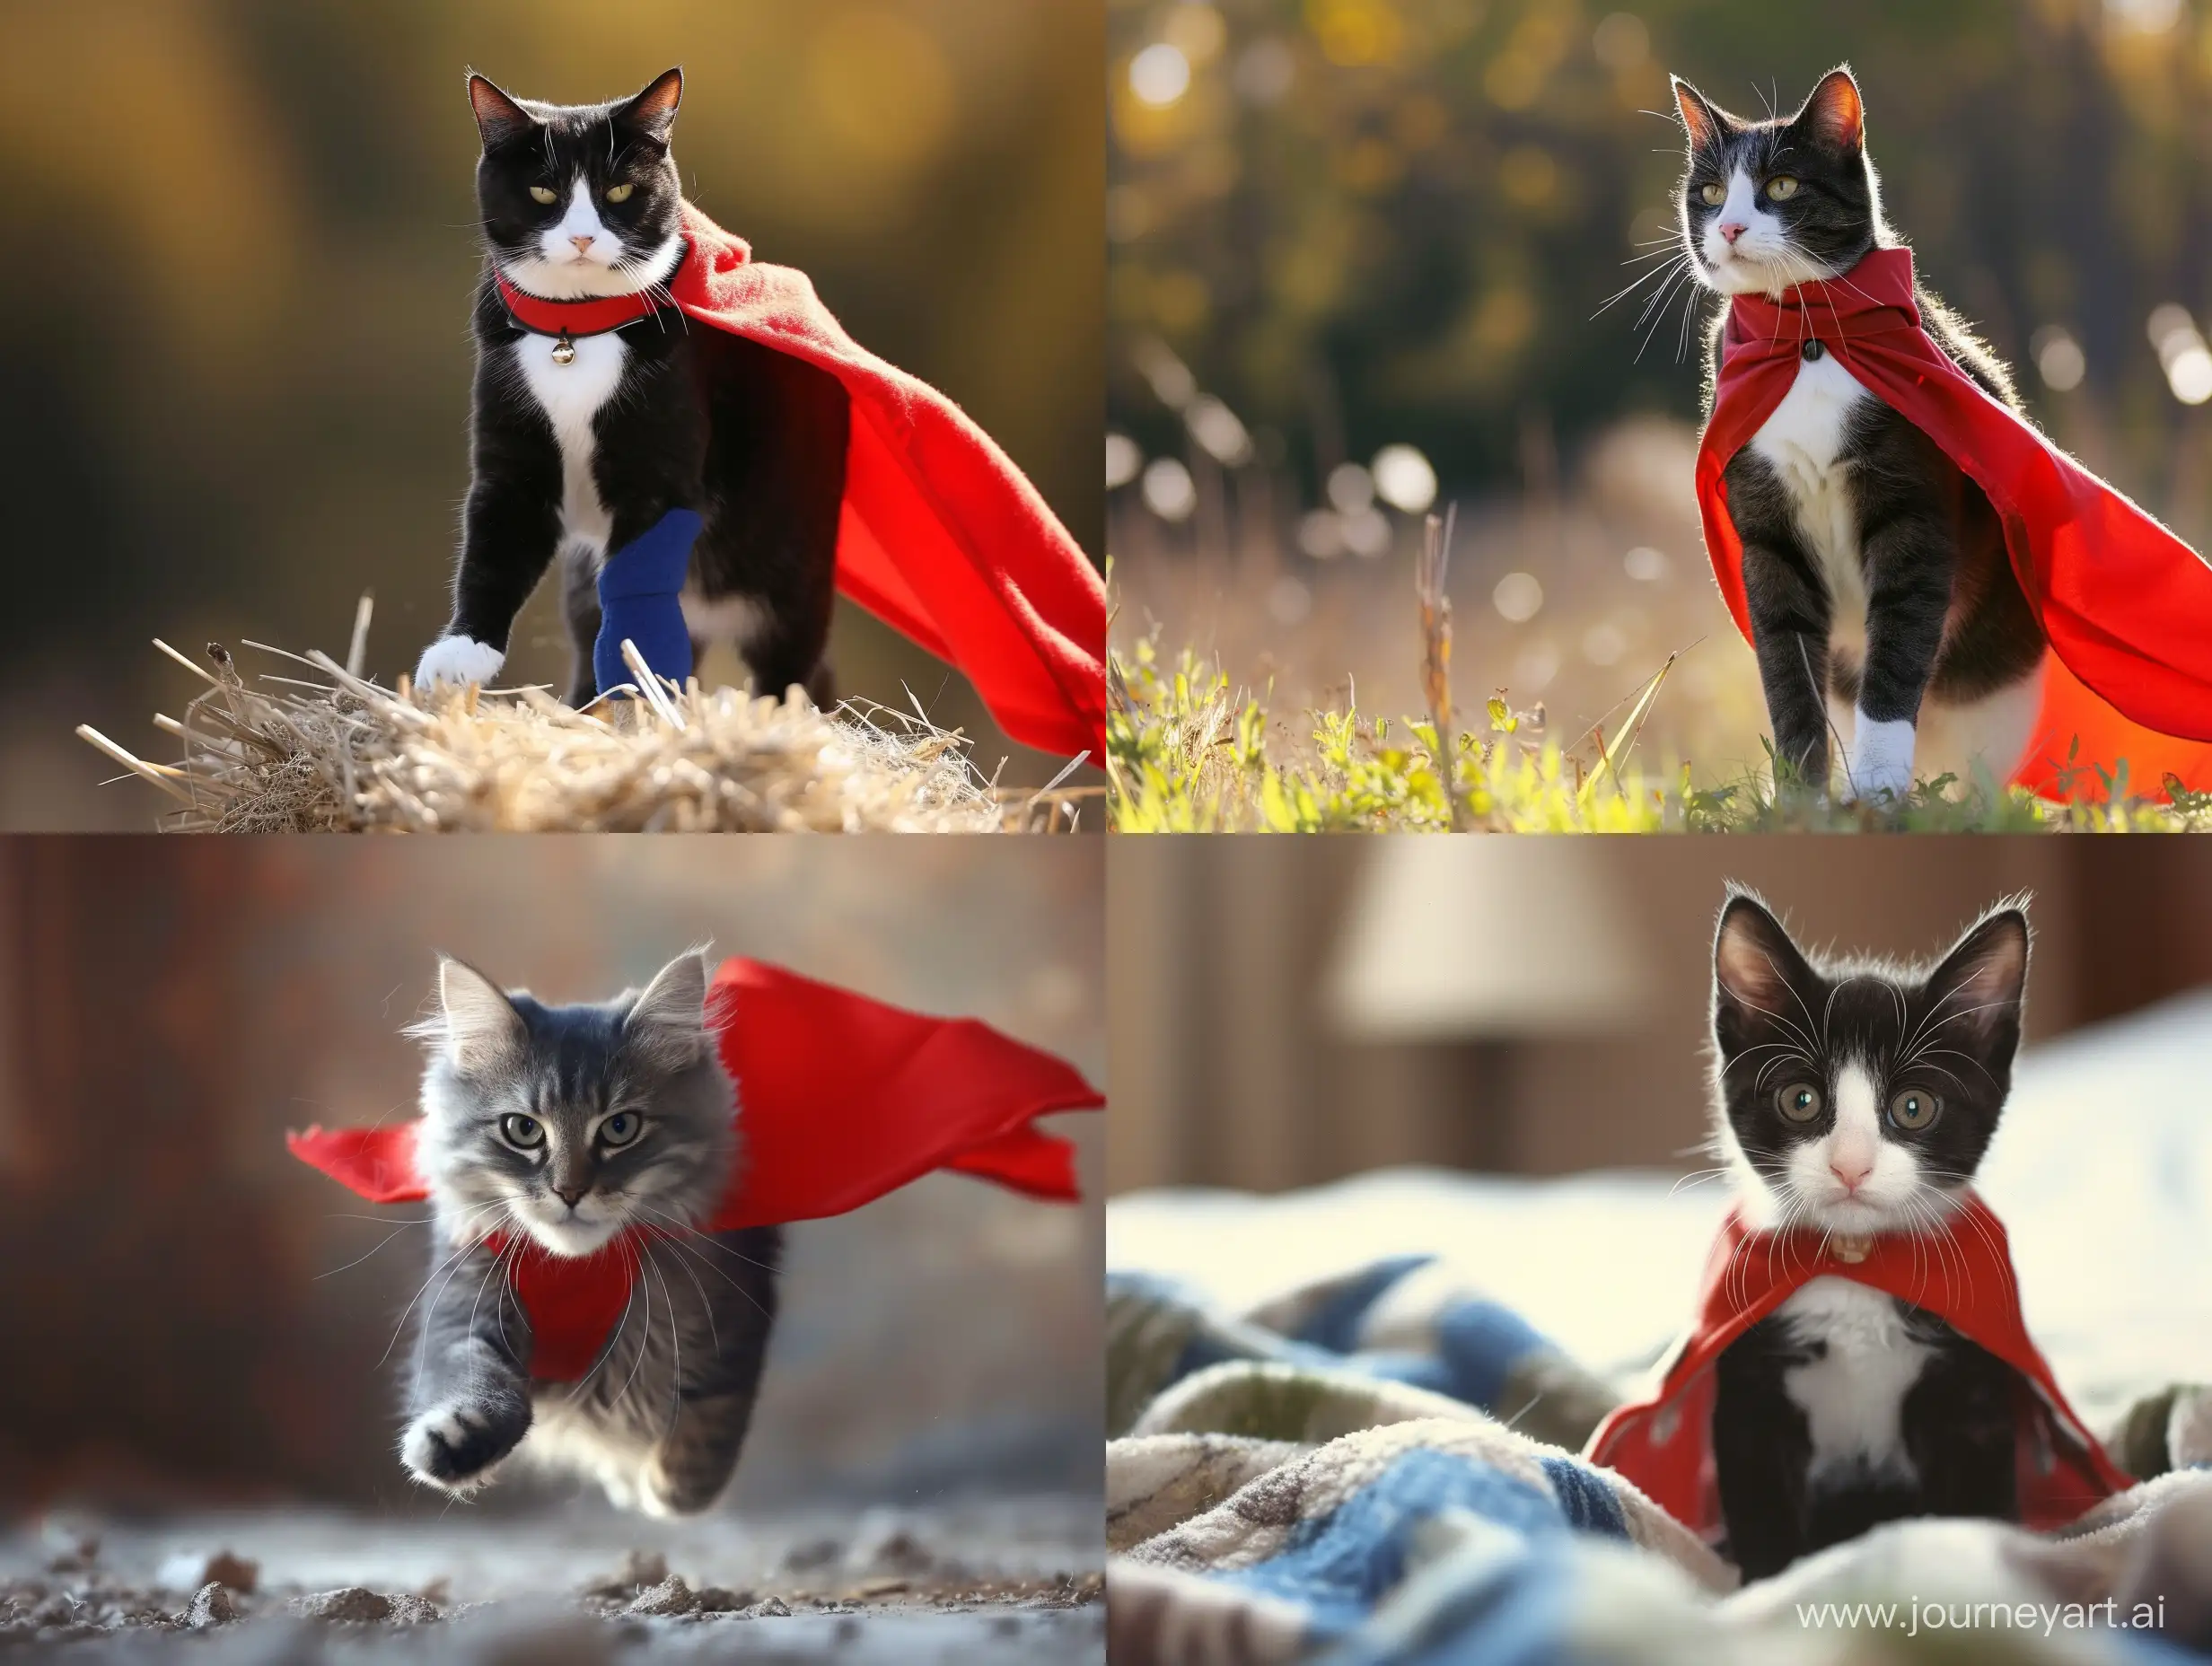 Adventurous-Super-Cat-in-Dynamic-Action